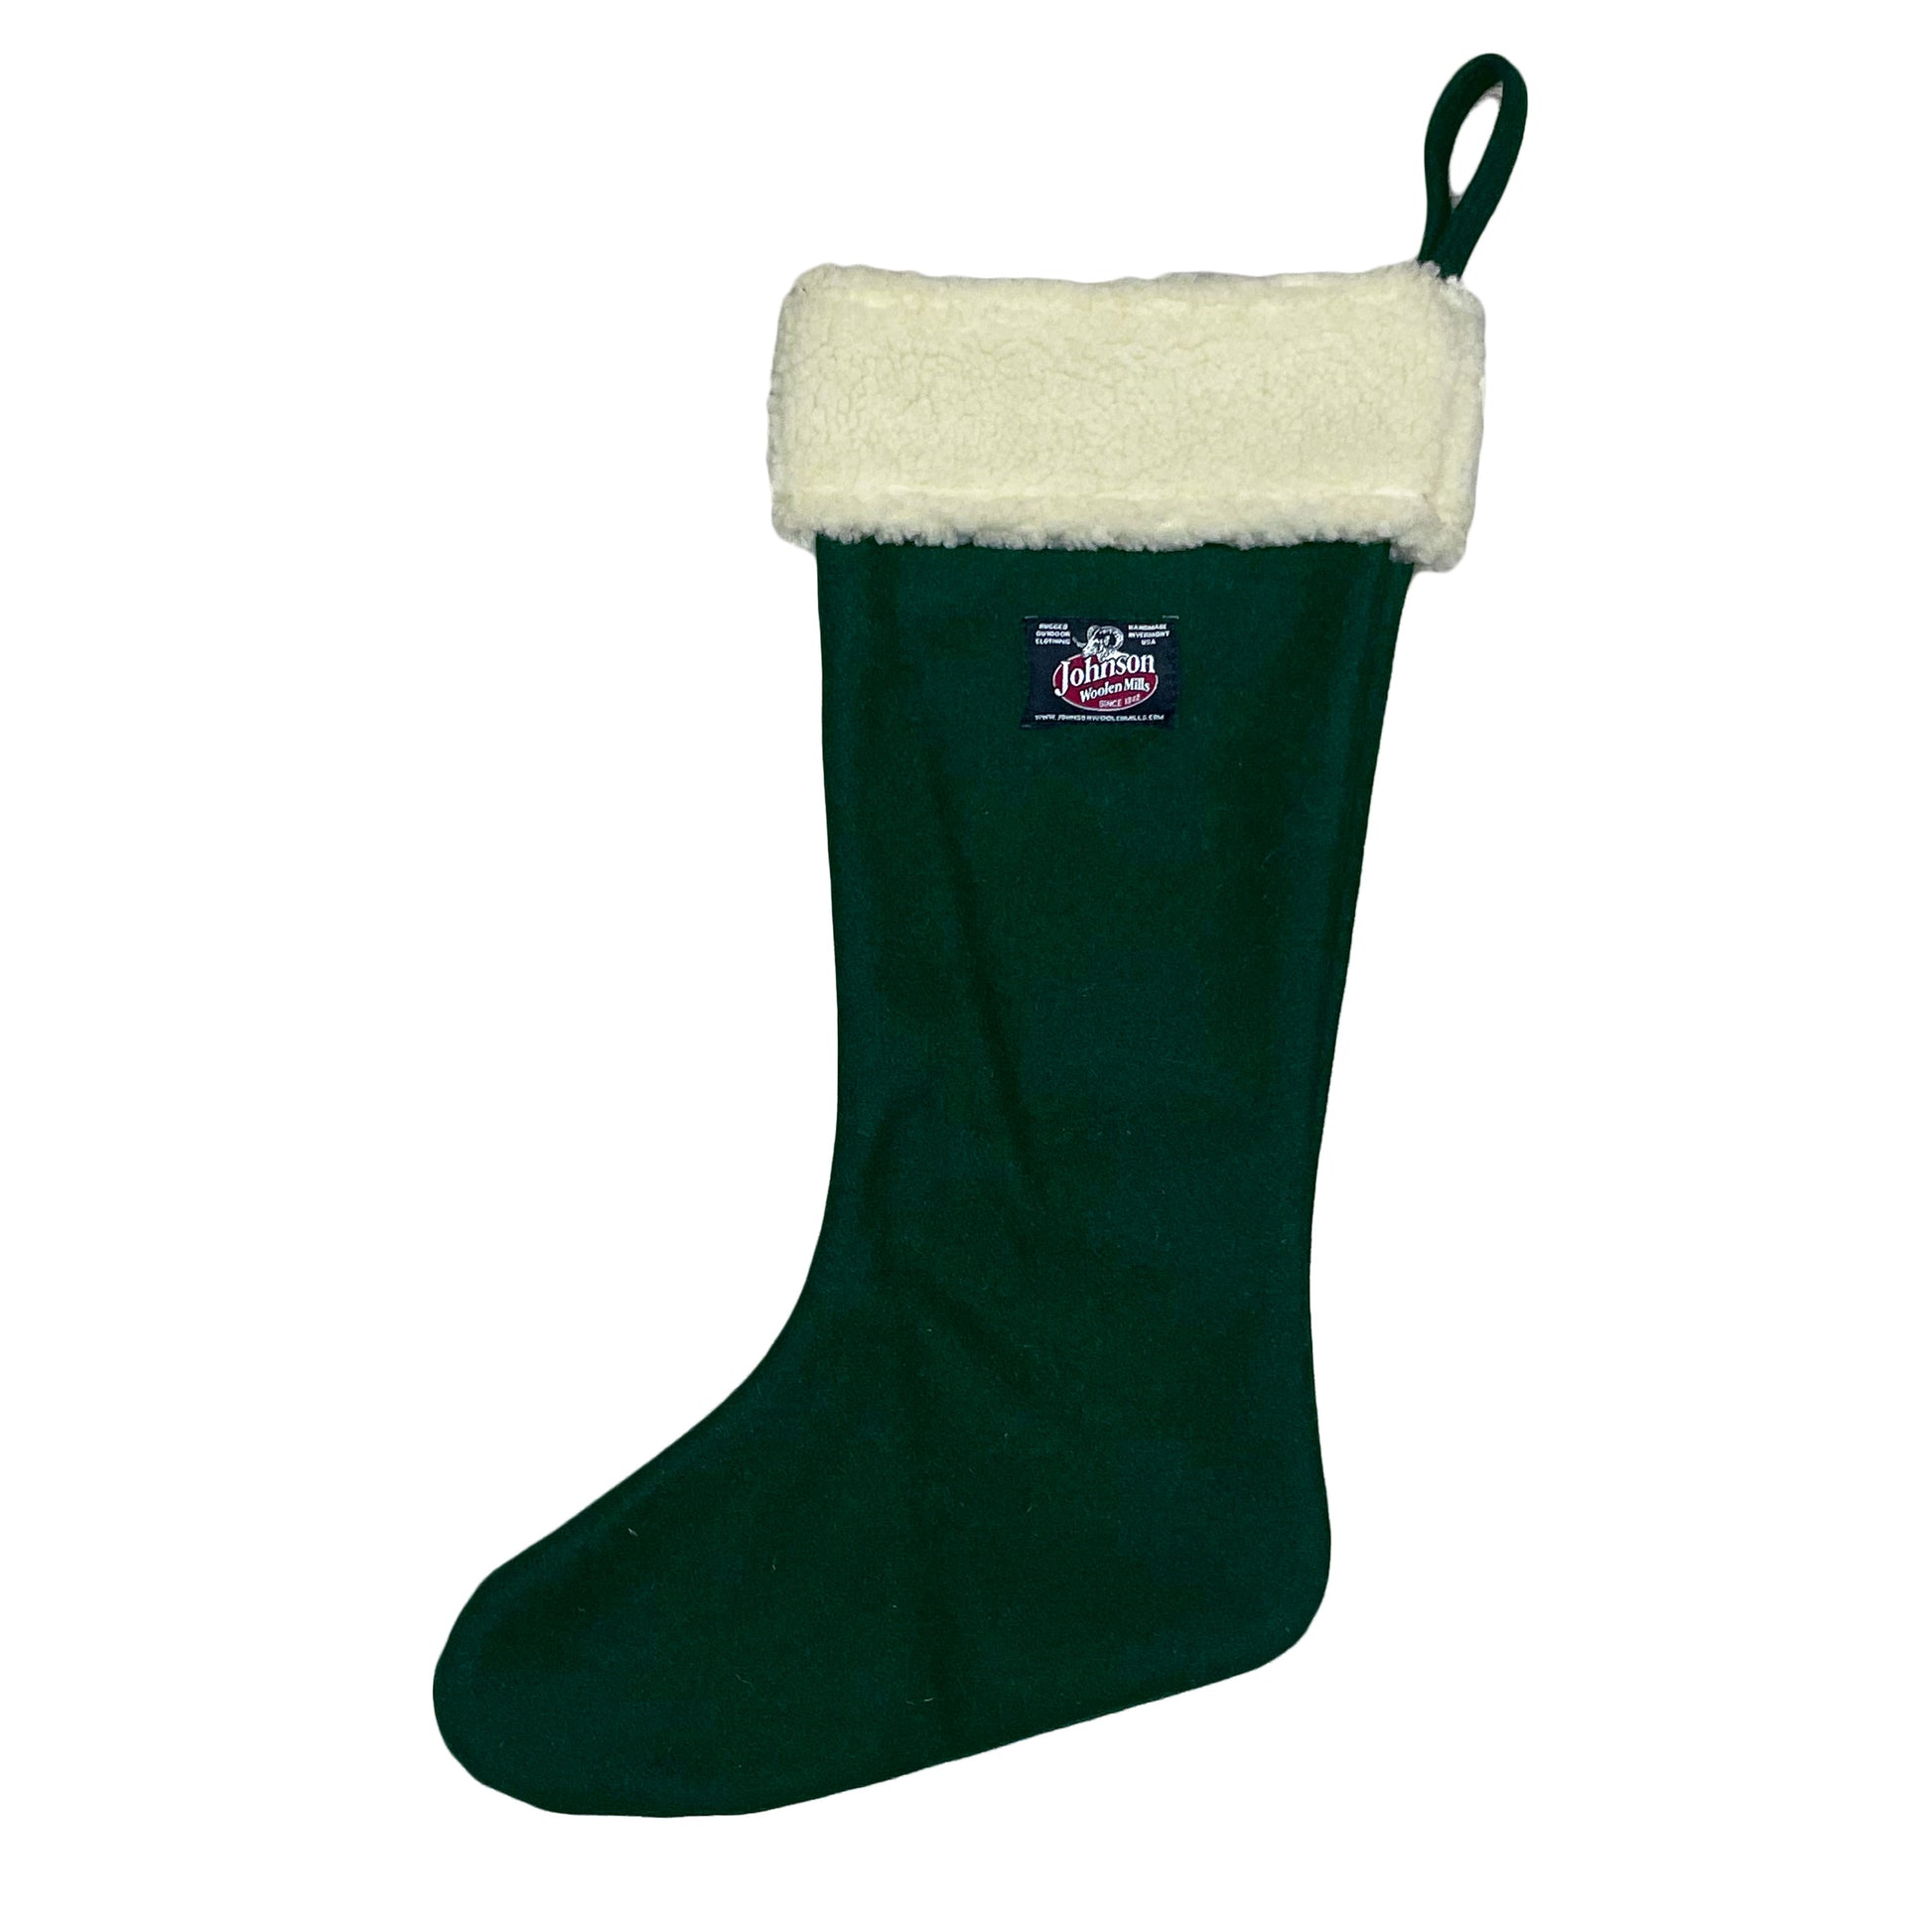 Green wool christmas stocking 